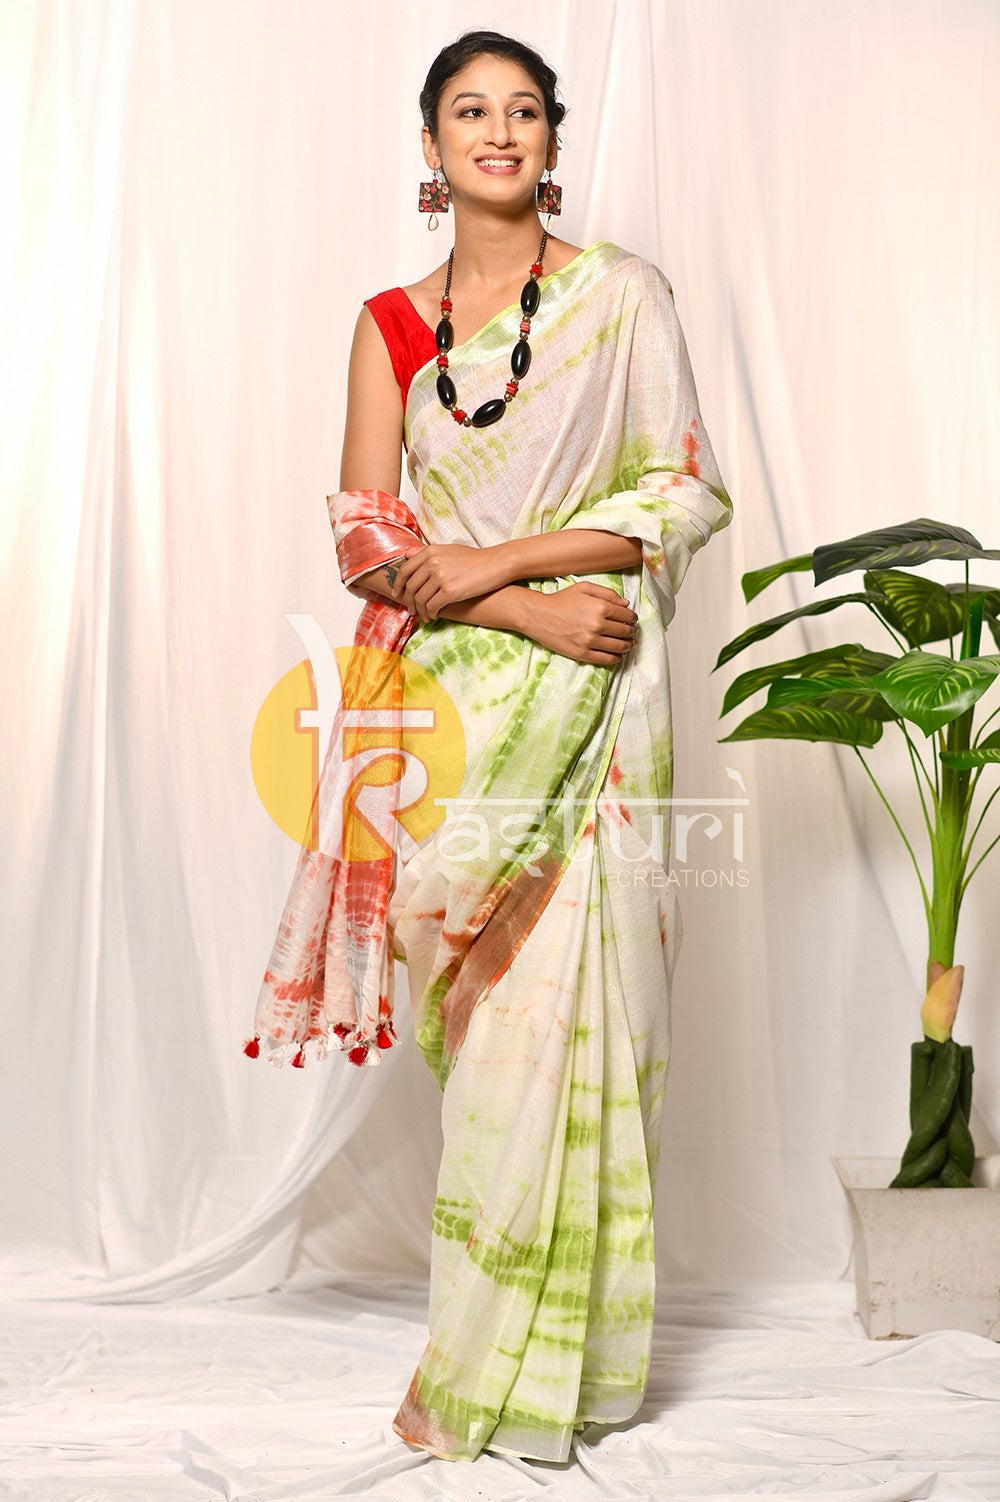 Green, red and white shibori tie dye print handloom cotton saree